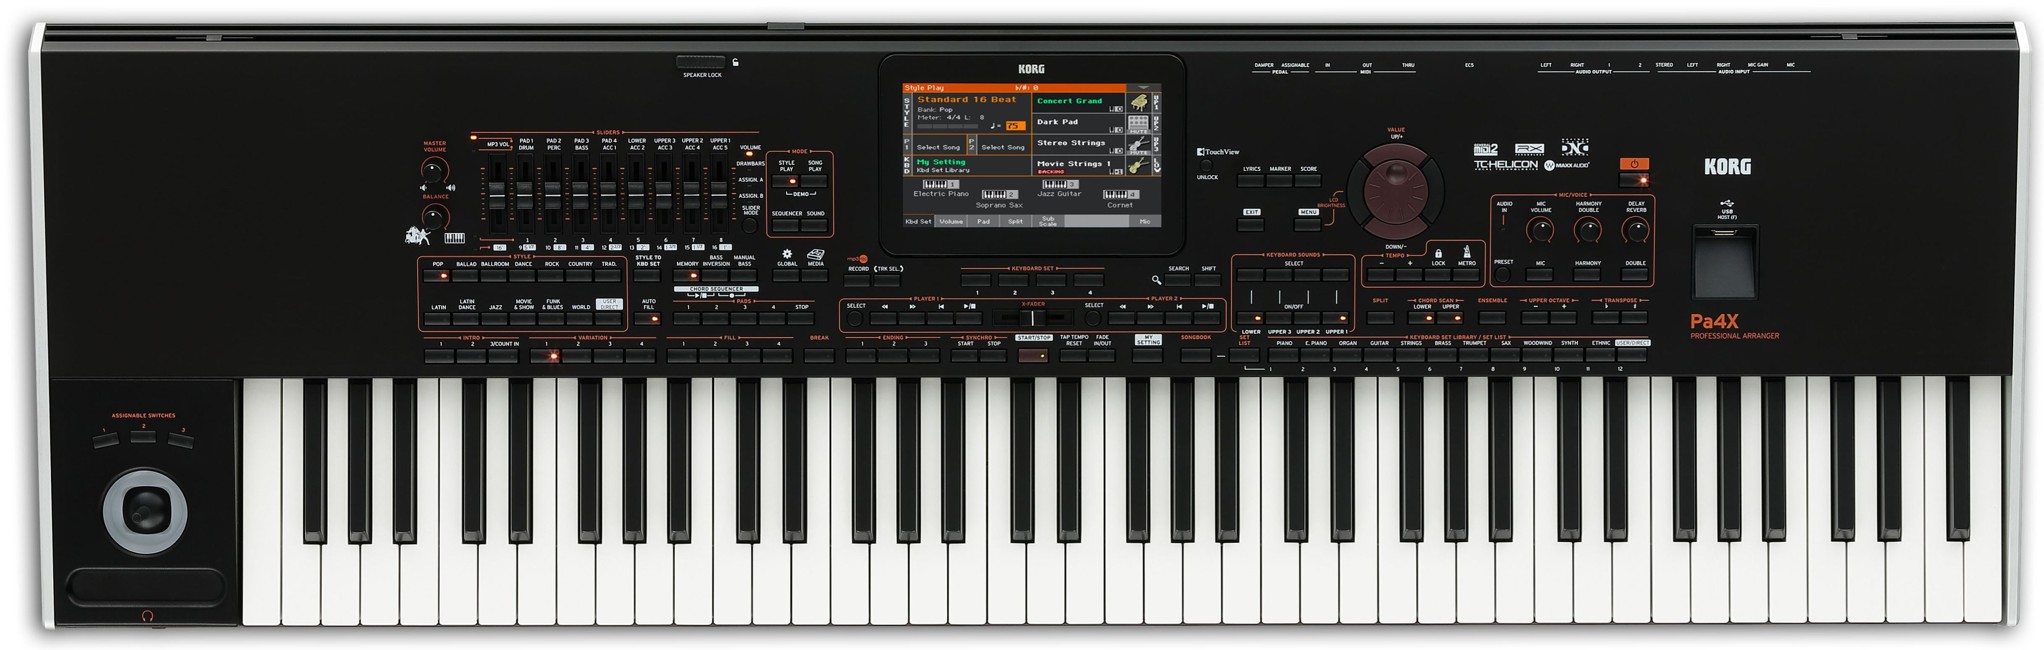 Korg PA4X-76 Arranger Keyboard